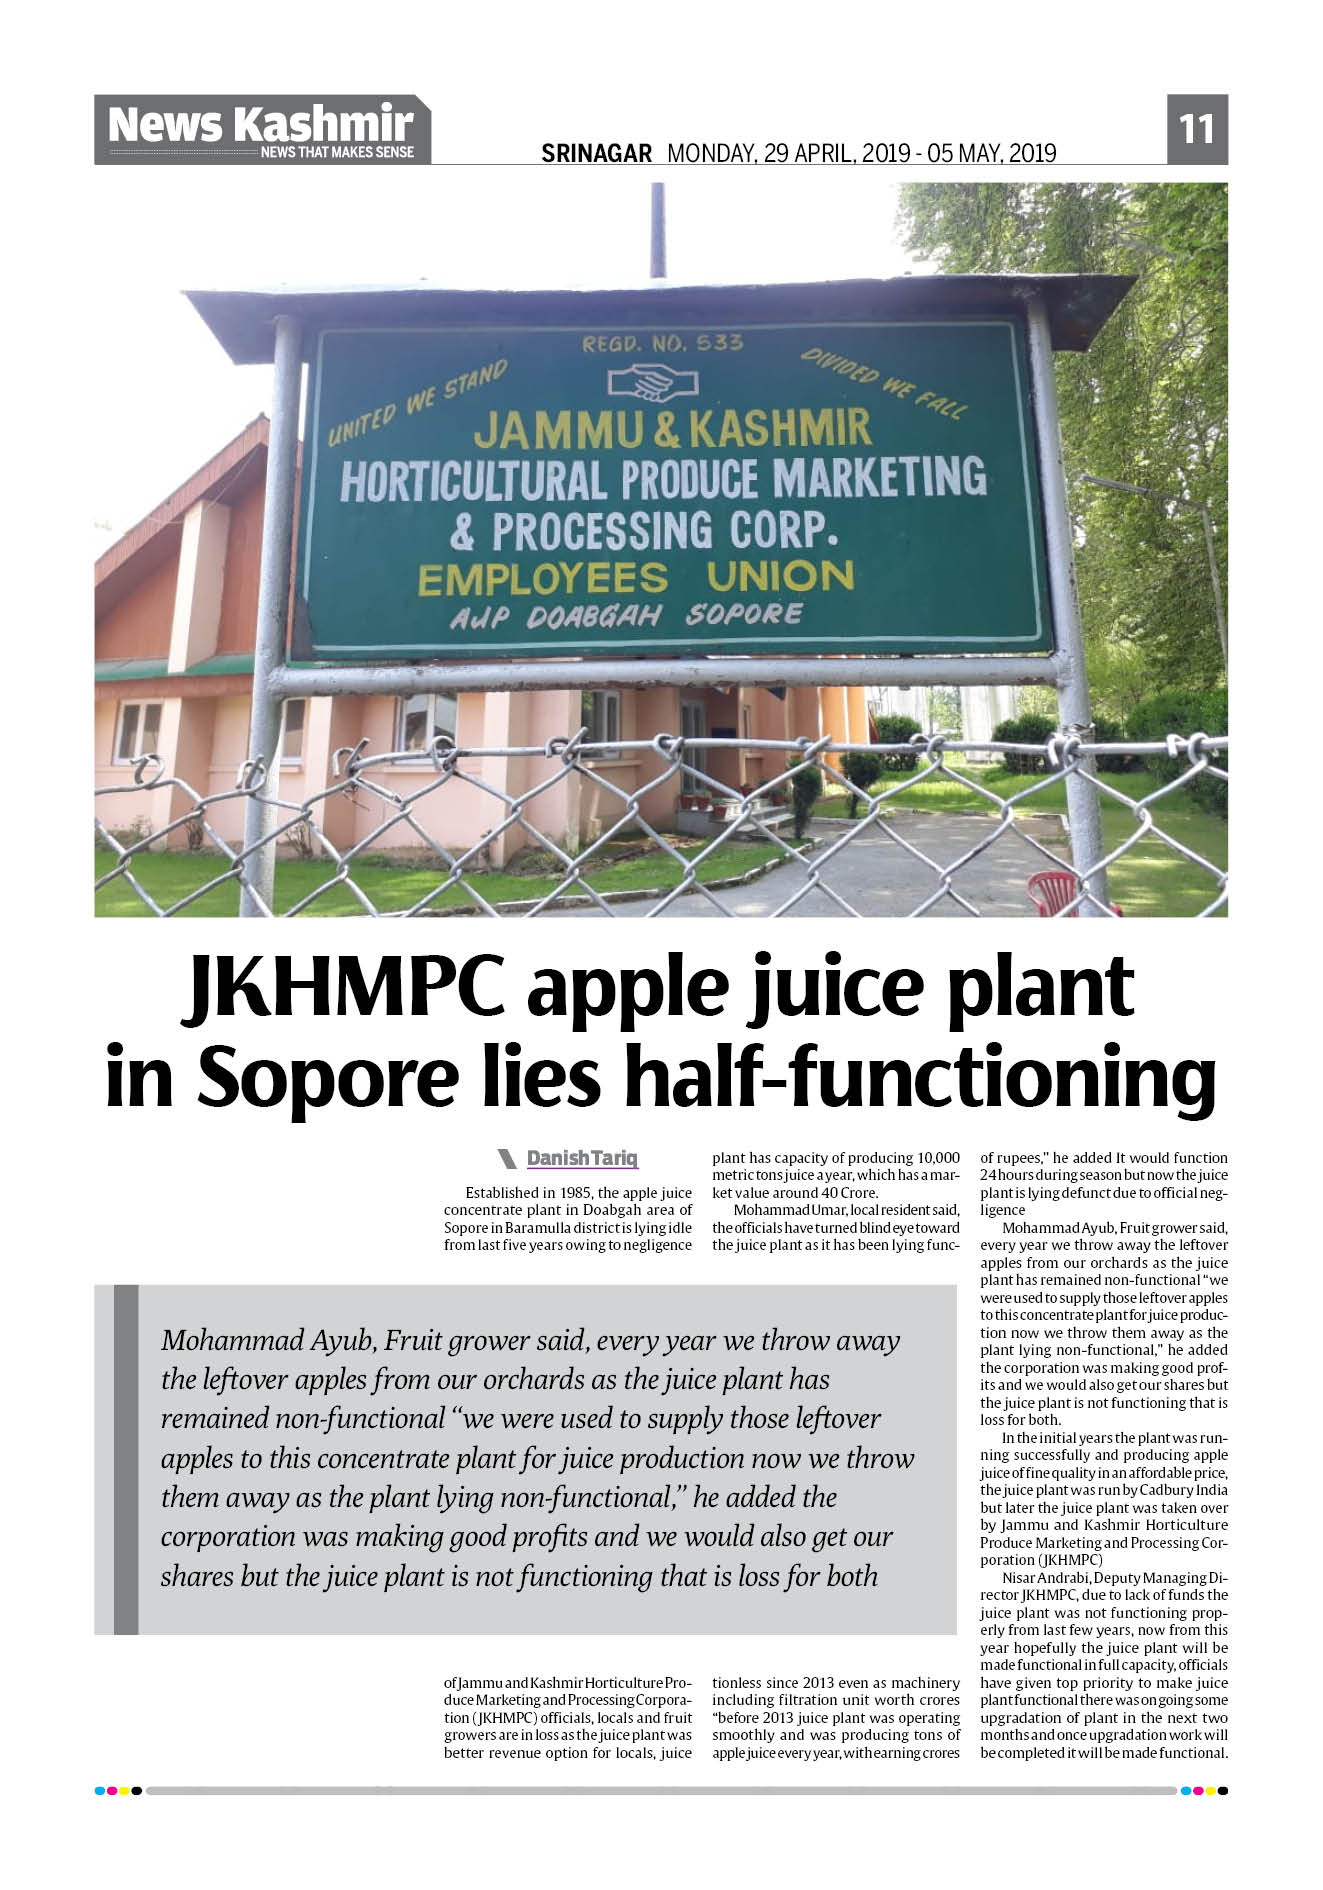 JKHMPC apple juice plant in Sopore lies half-functioning